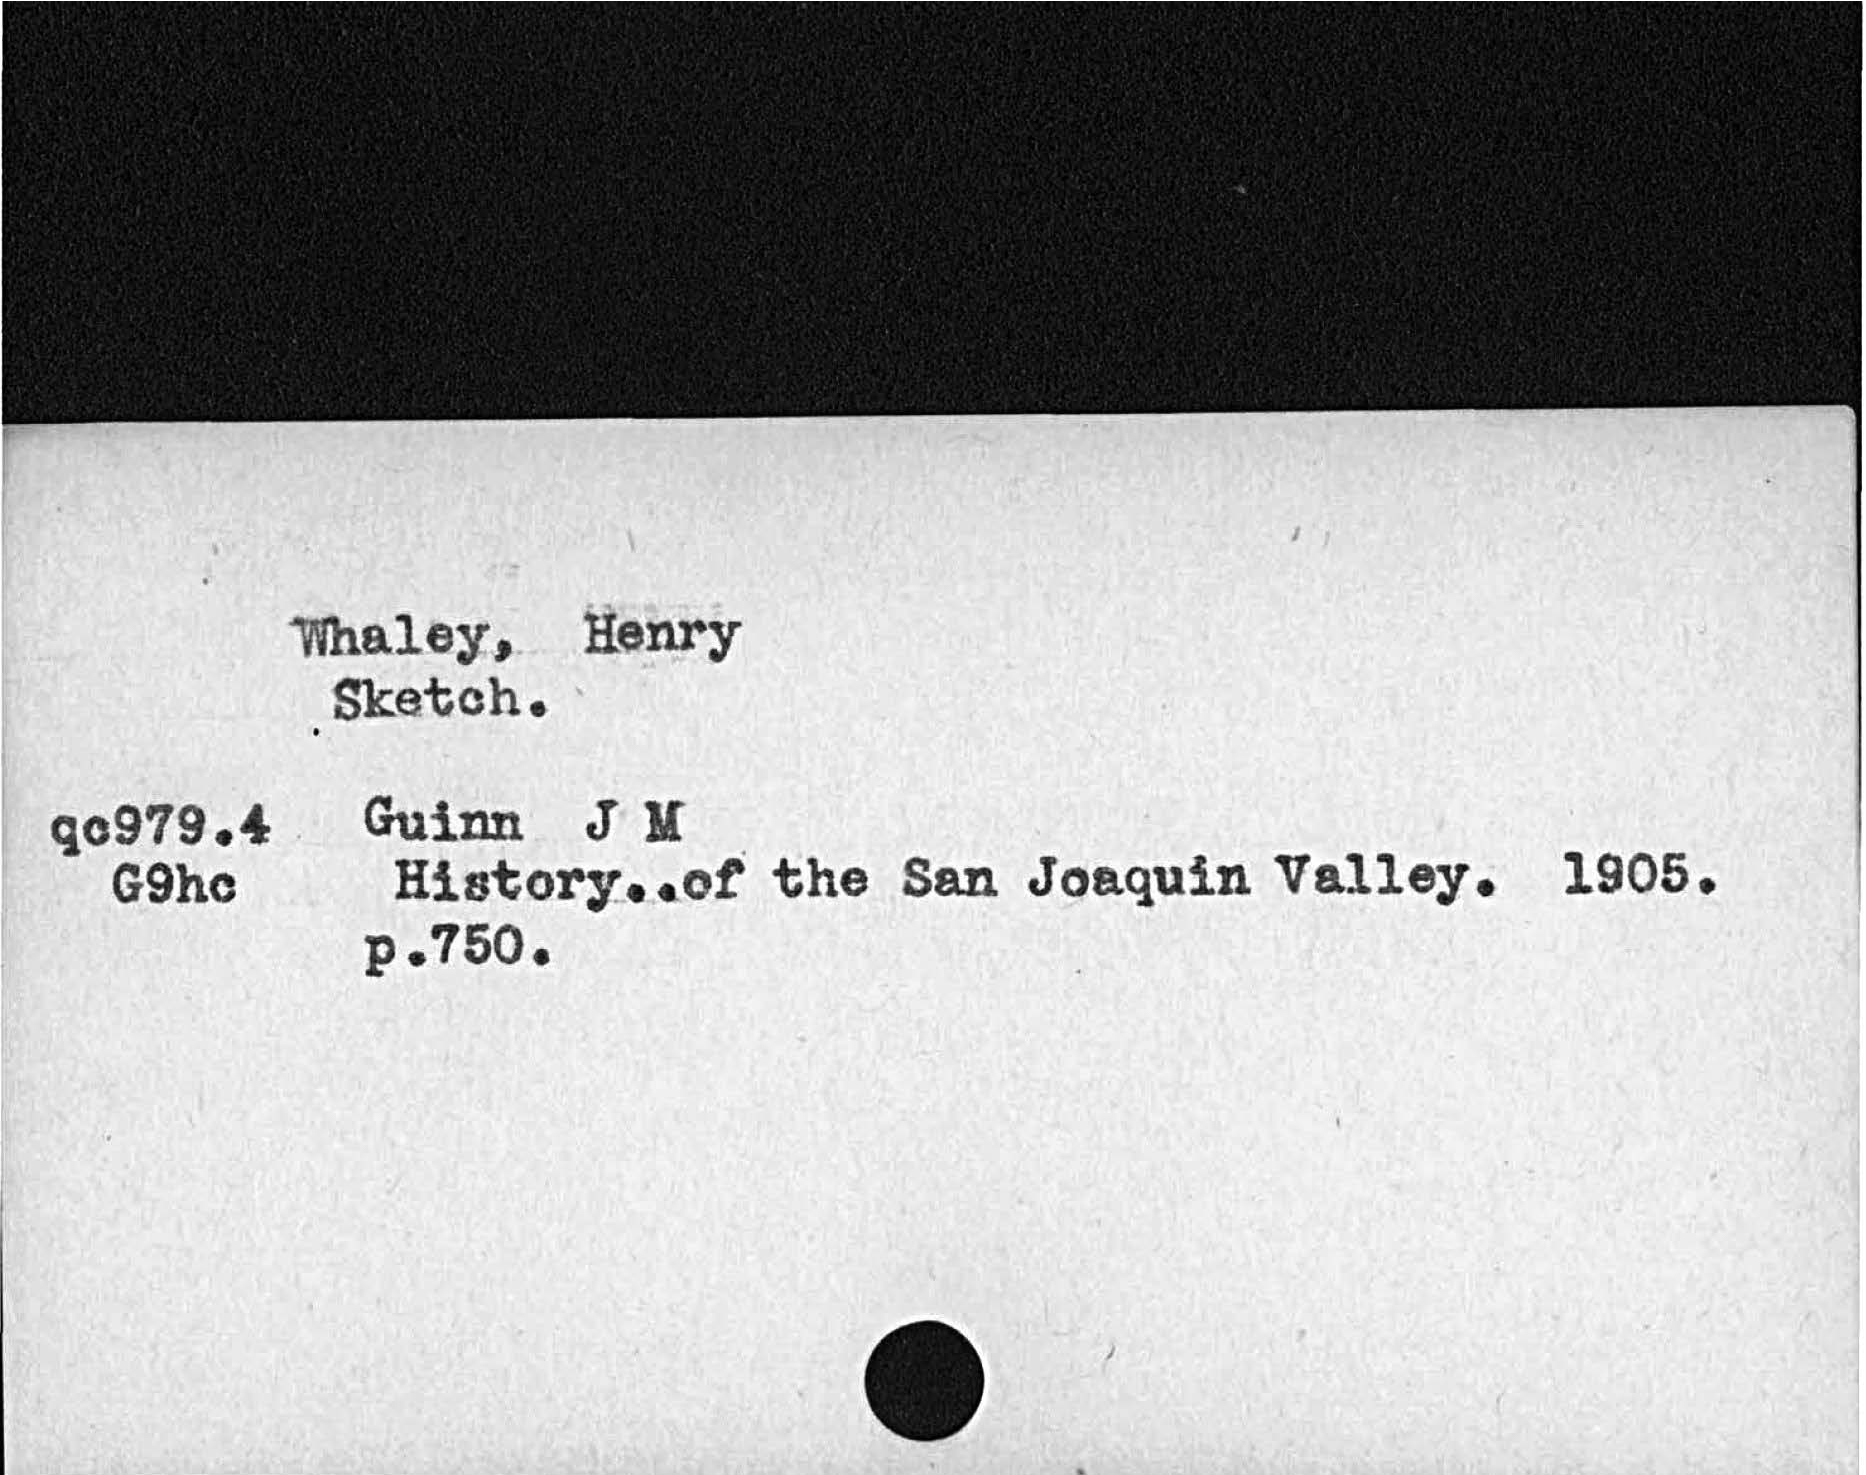 Whaley HenrySketch.Guinn J Jlhistory Occupations the San Joaquin Valley. 1905p. 750   qo979. 4.  G9hc